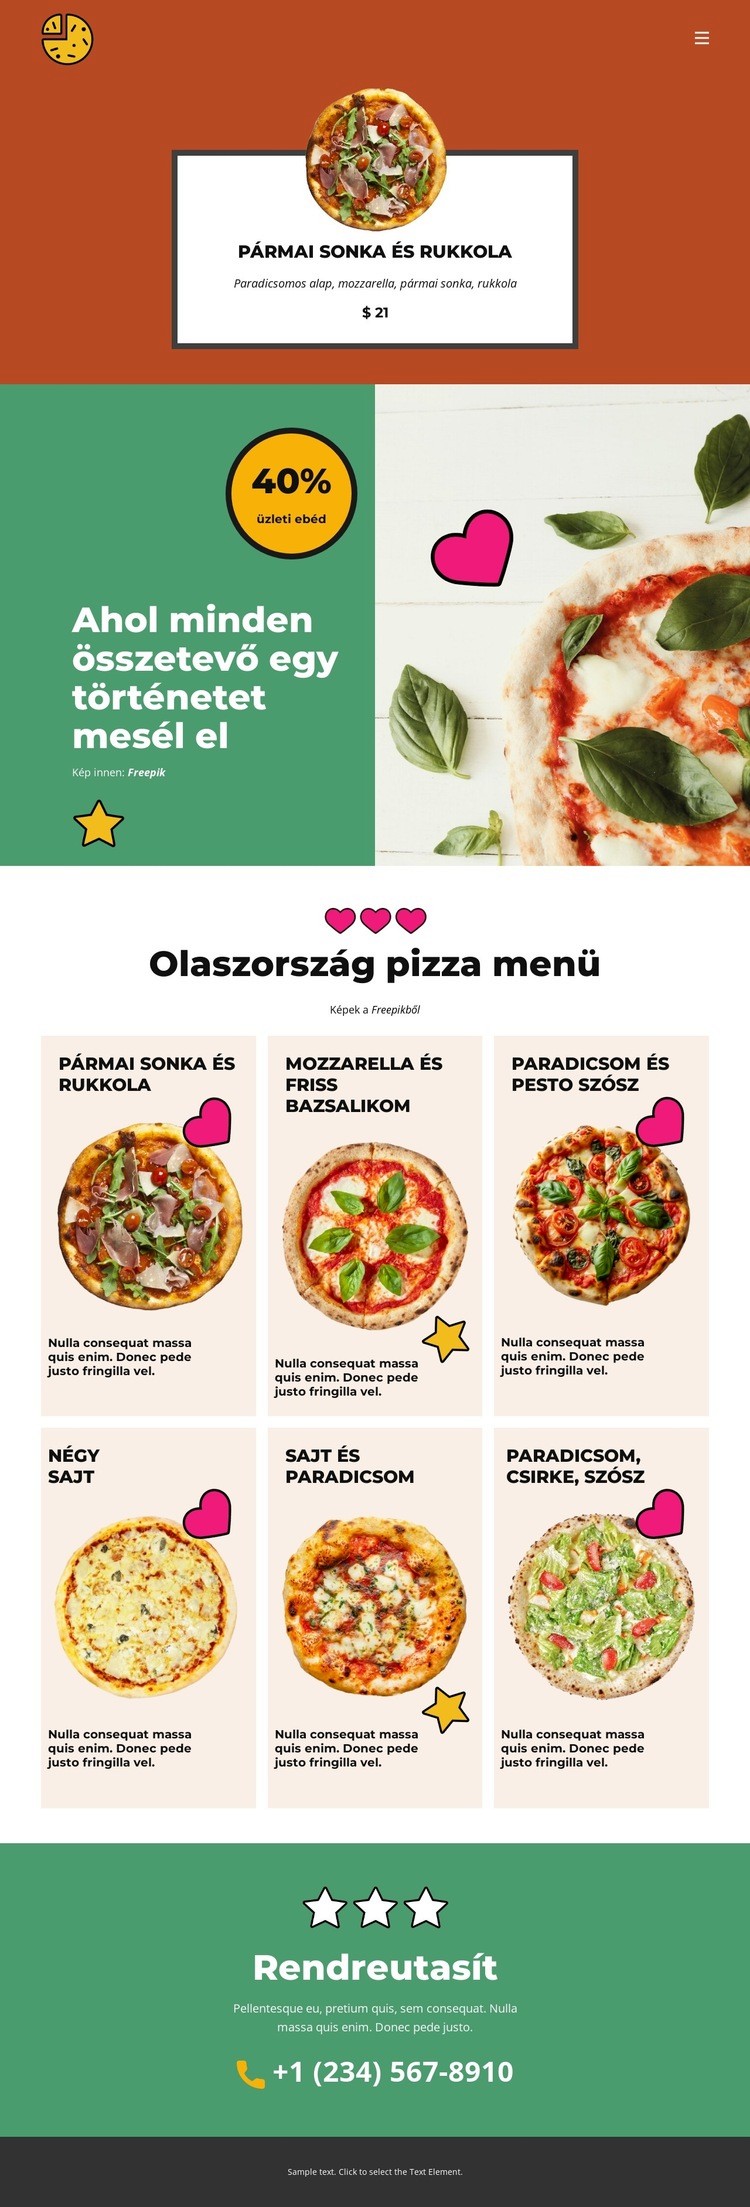 Fun Facts about Pizza Sablon